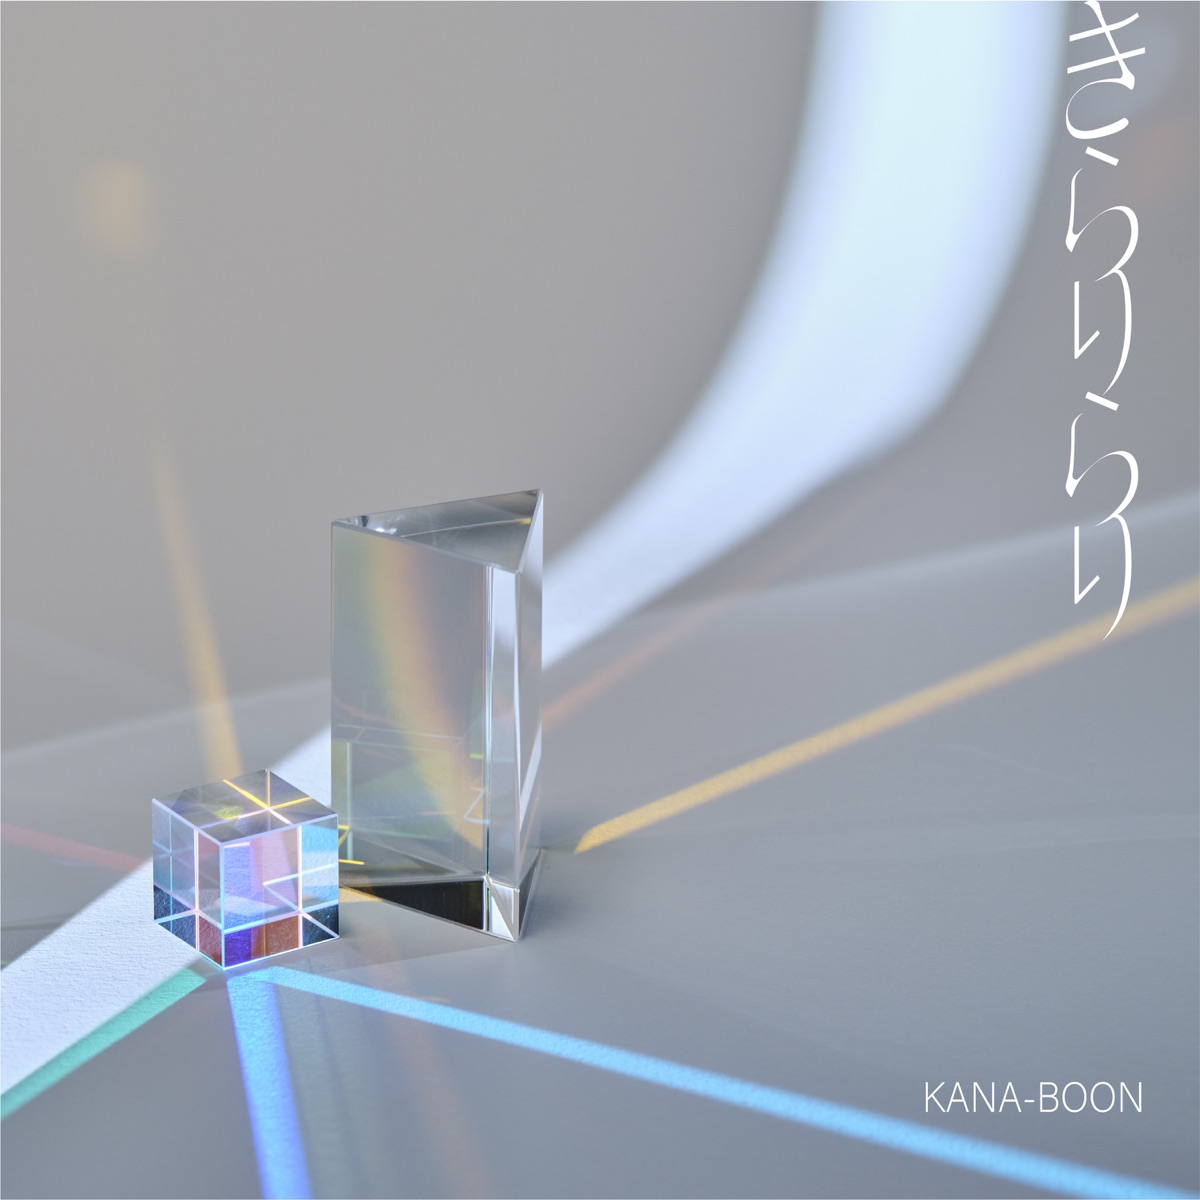 Cover art for『KANA-BOON - Everlong』from the release『Kirarirari』